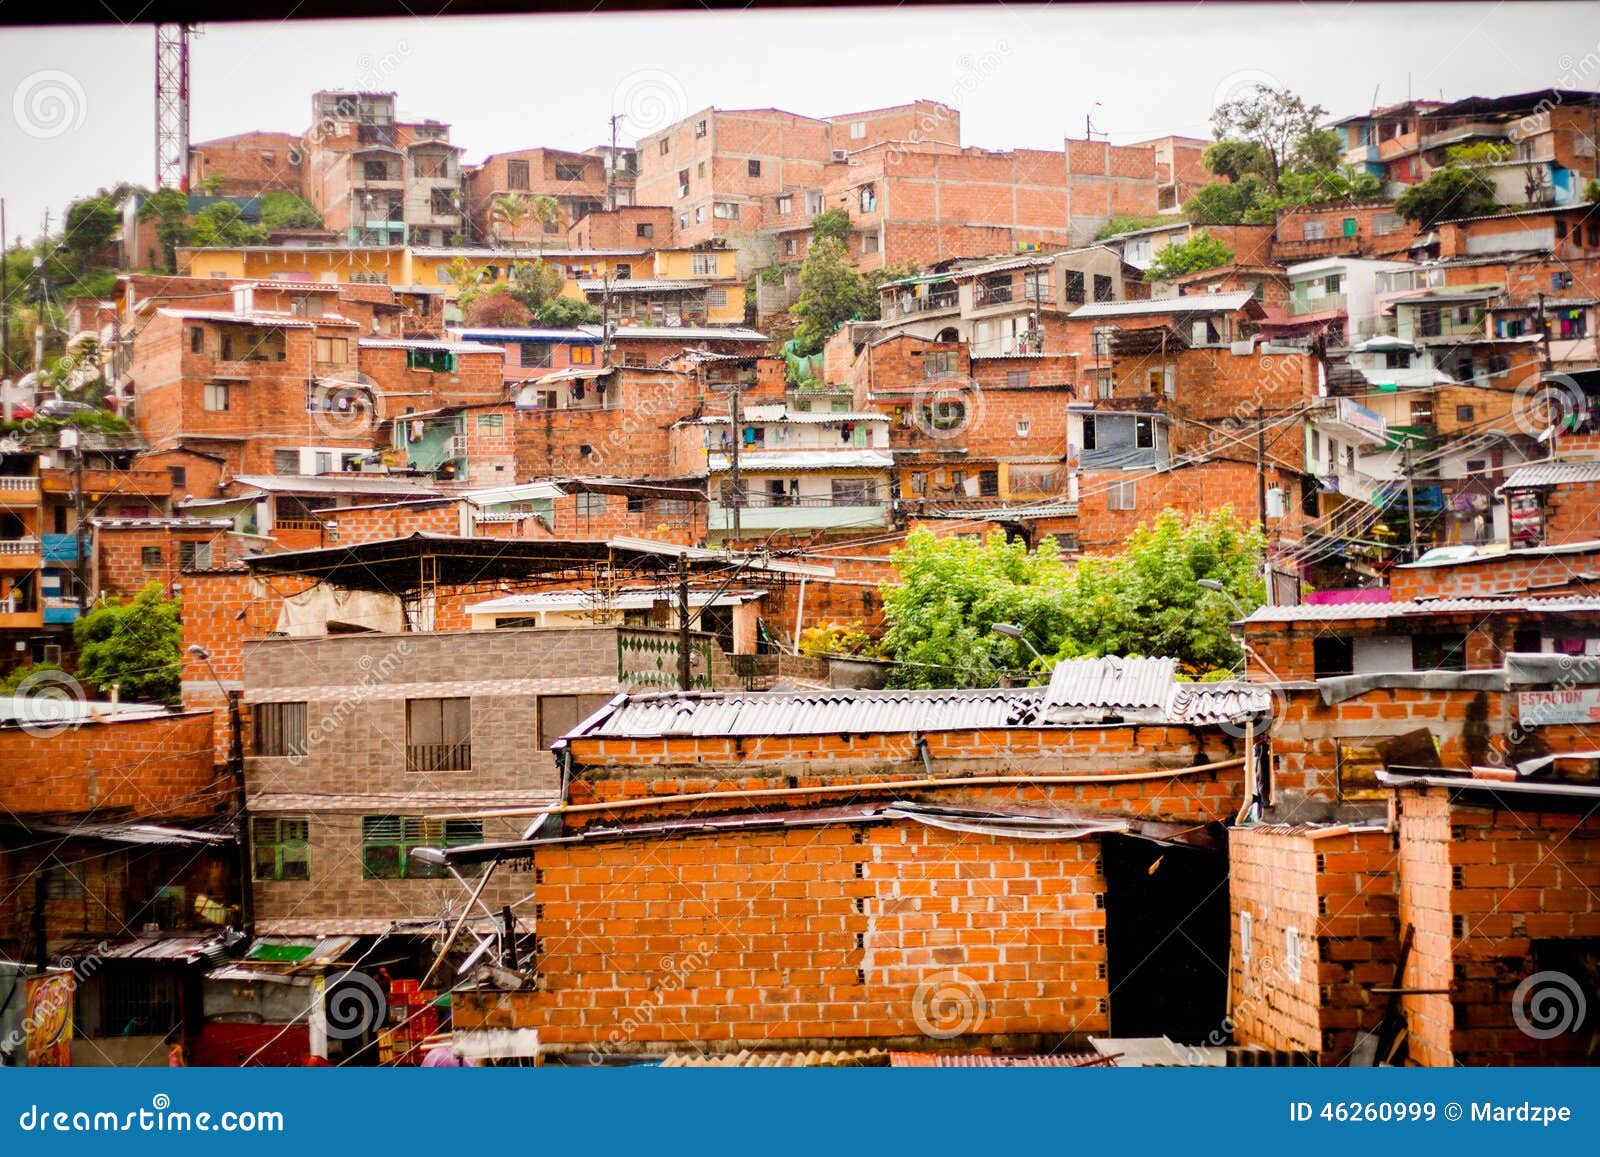 medellin city favela type housing near downtown